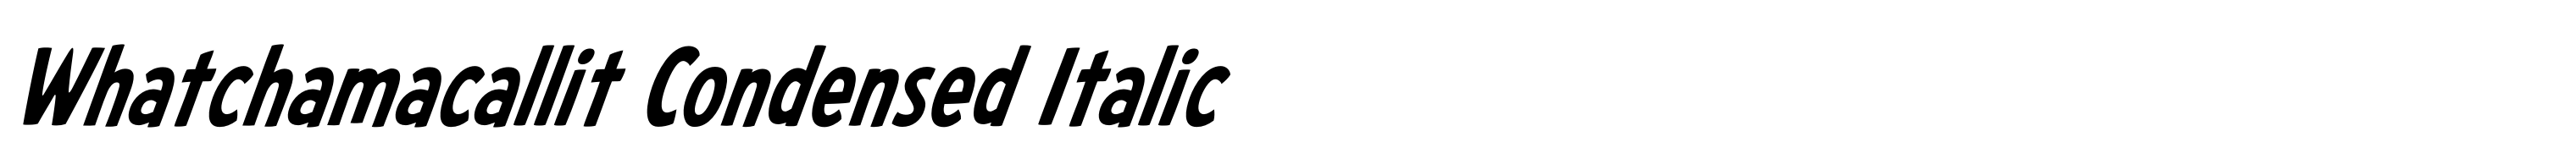 Whatchamacallit Condensed Italic